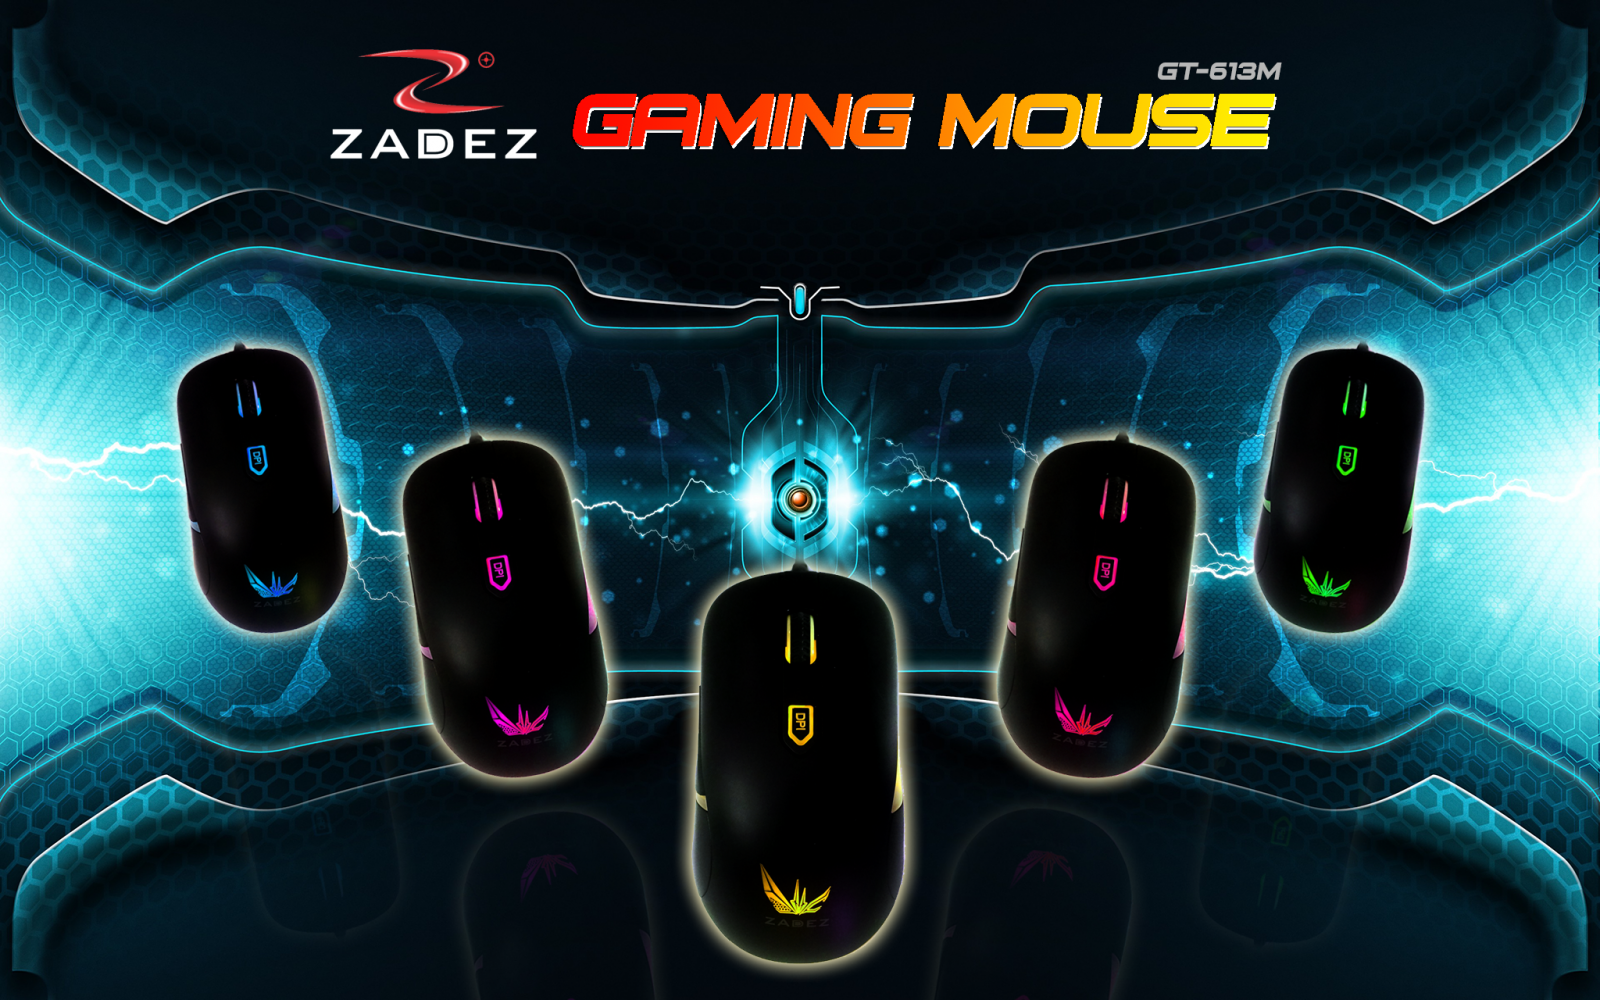 Zadez Gaming Mouse GT-613M